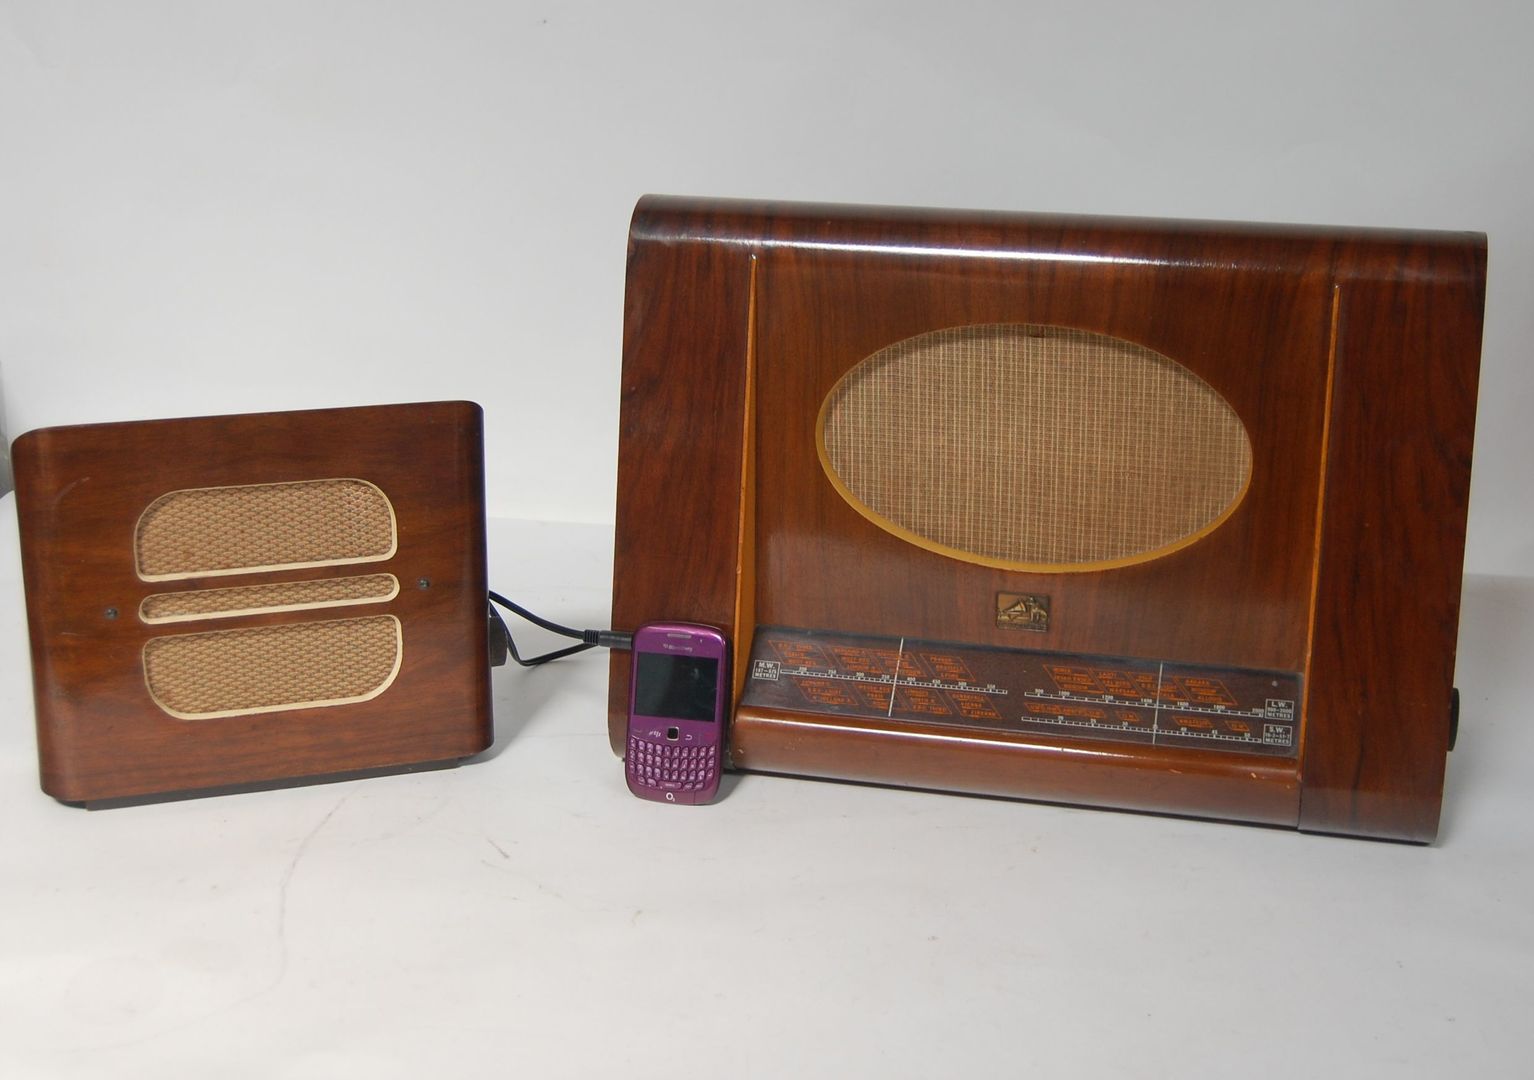 Vintage 1950s HMV Wooden Valve Radio Model 1122 & 1940s Stentorian Bristol Extension Wooden Speaker Retro Bazaar Ltd Soggiorno eclettico